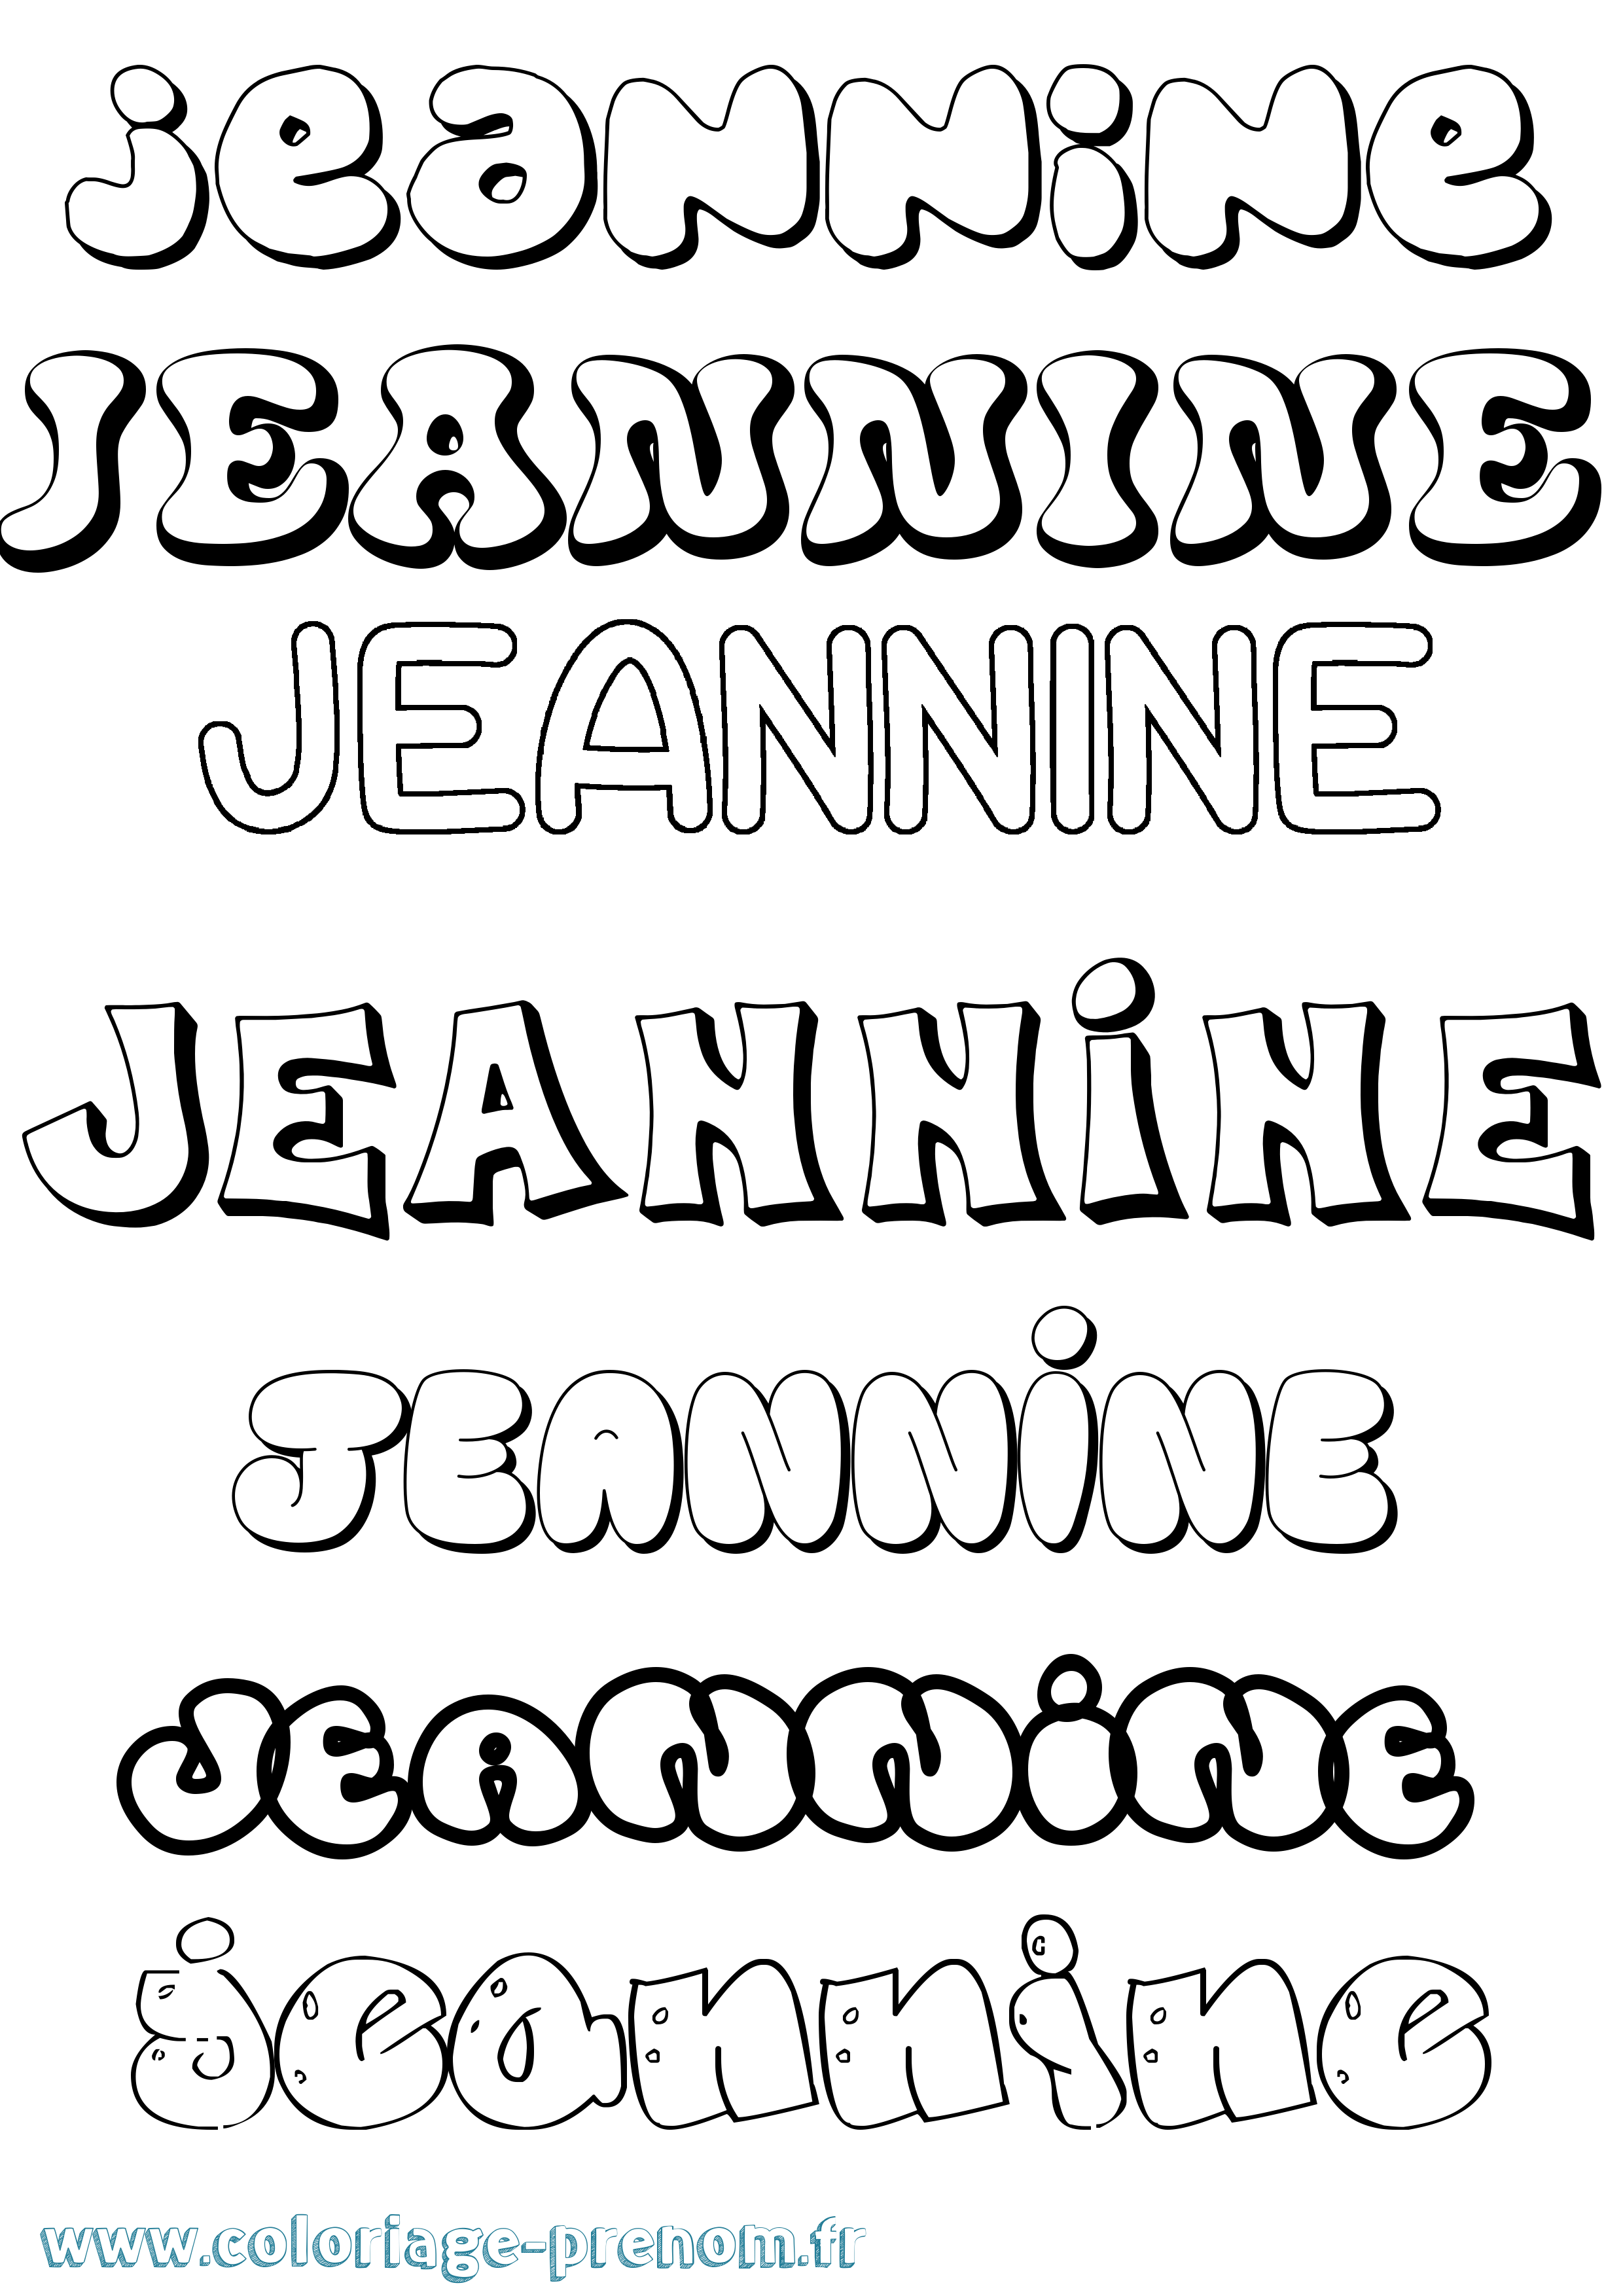 Coloriage prénom Jeannine Bubble